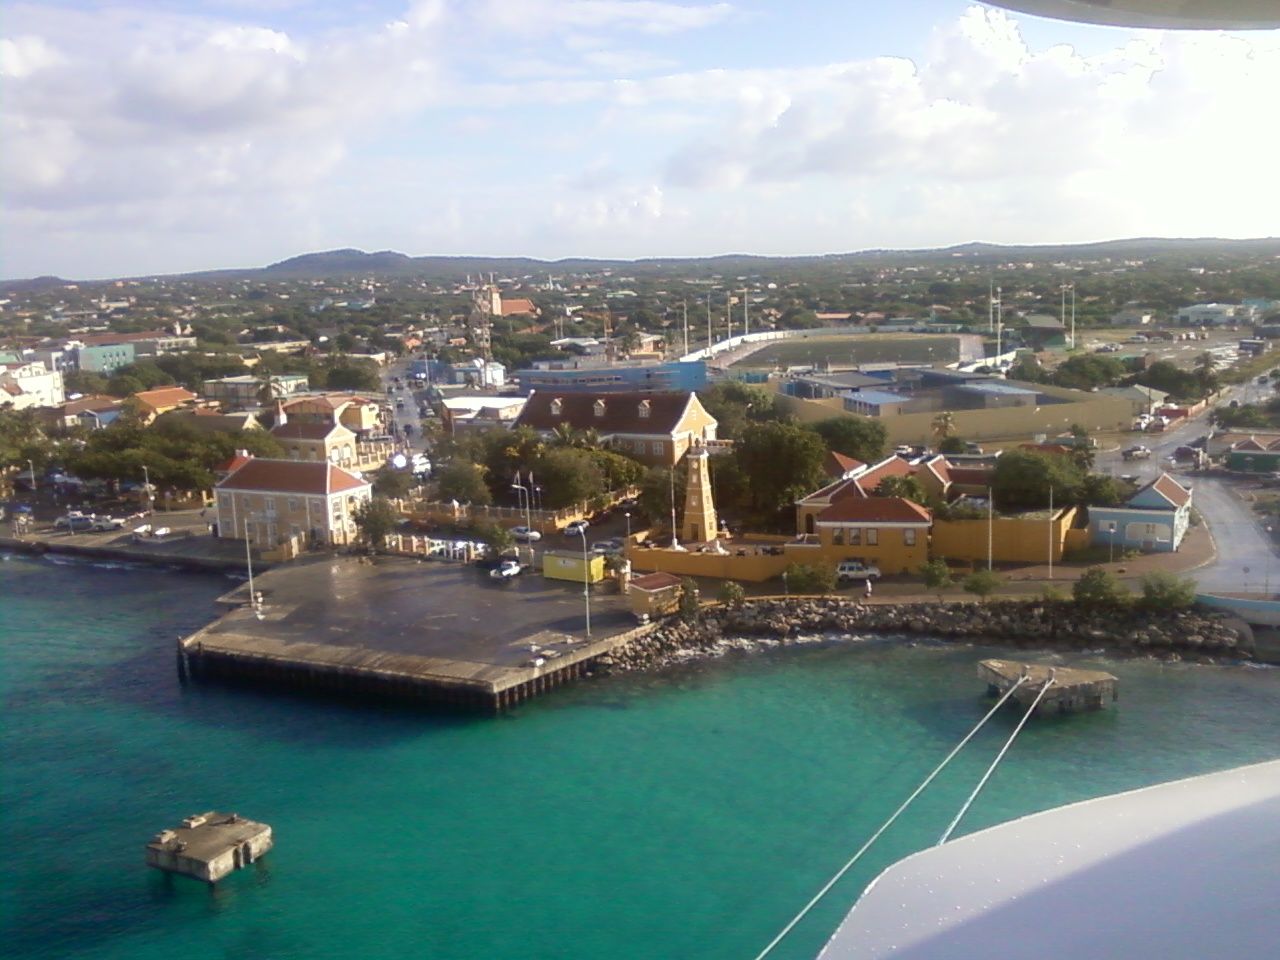 Bonaire.jpg